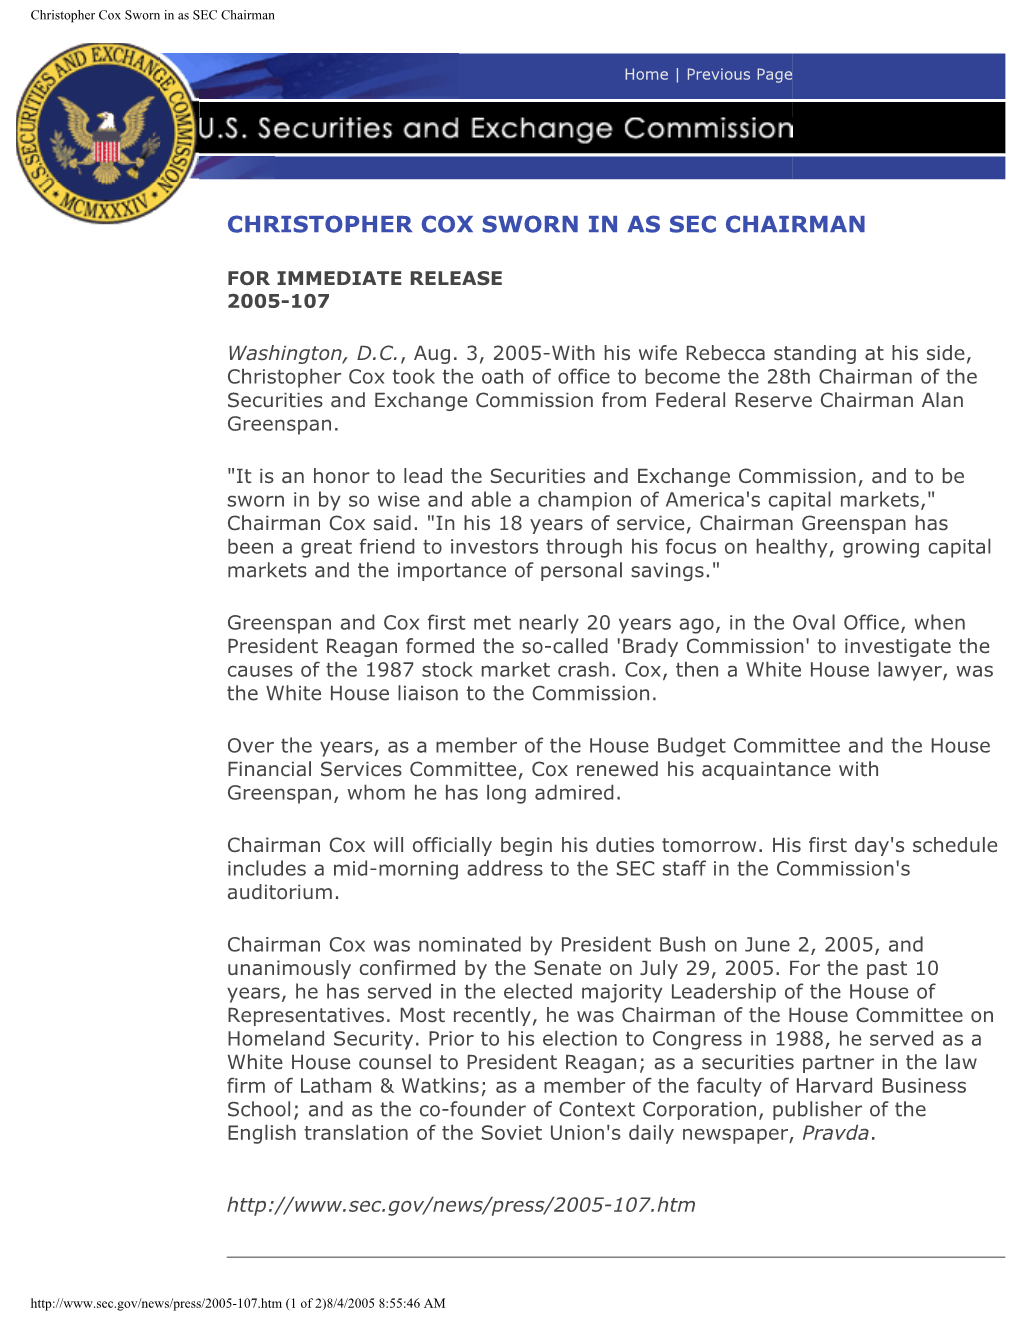 Christopher Cox Sworn in As SEC Chairman